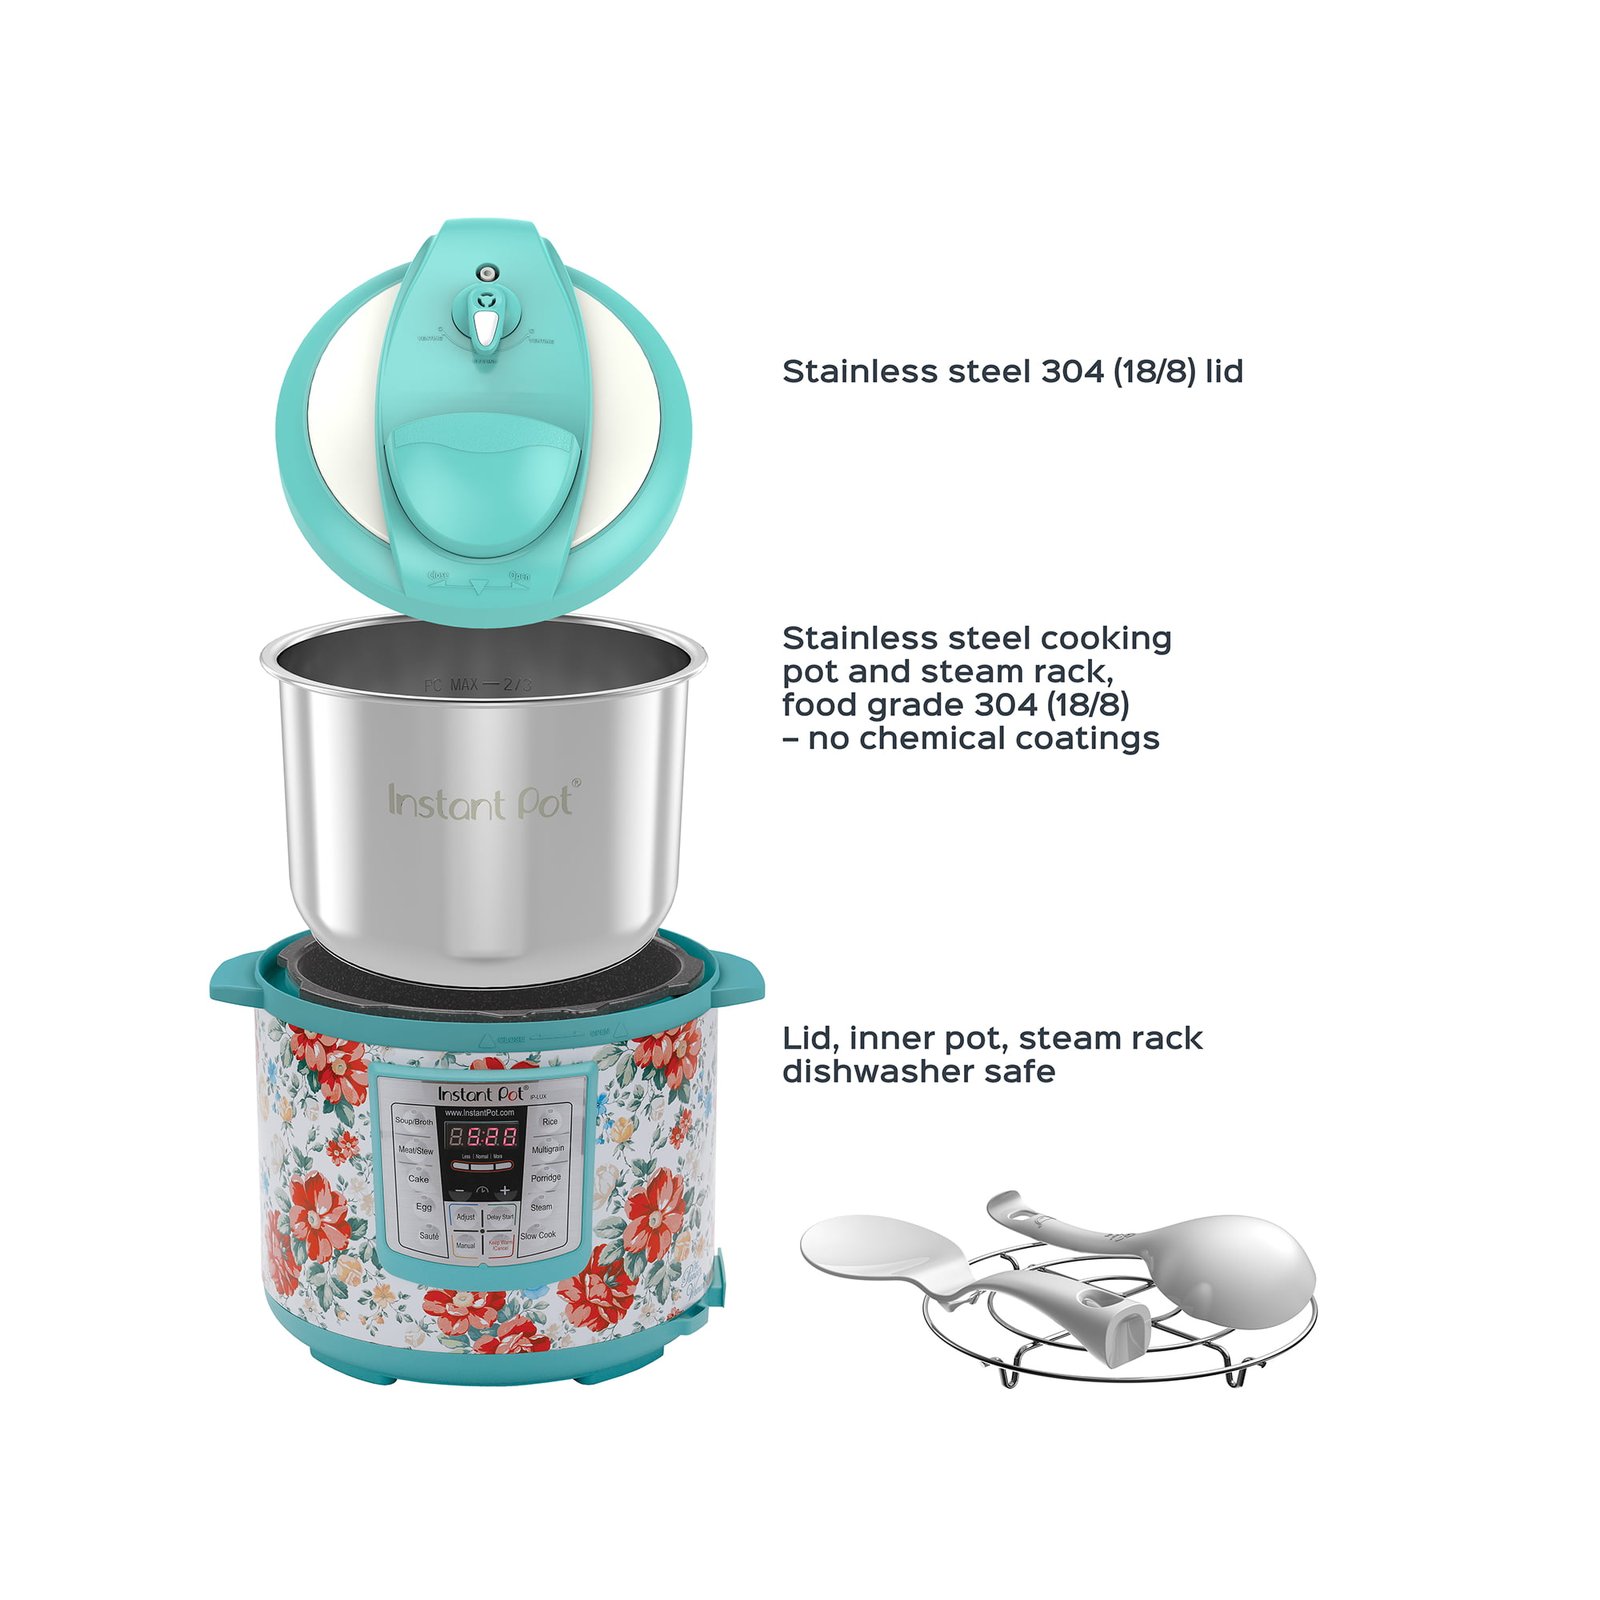 The Instant Pot Lux60 V3 6-Quart Pressure Cooker Is On Sale For